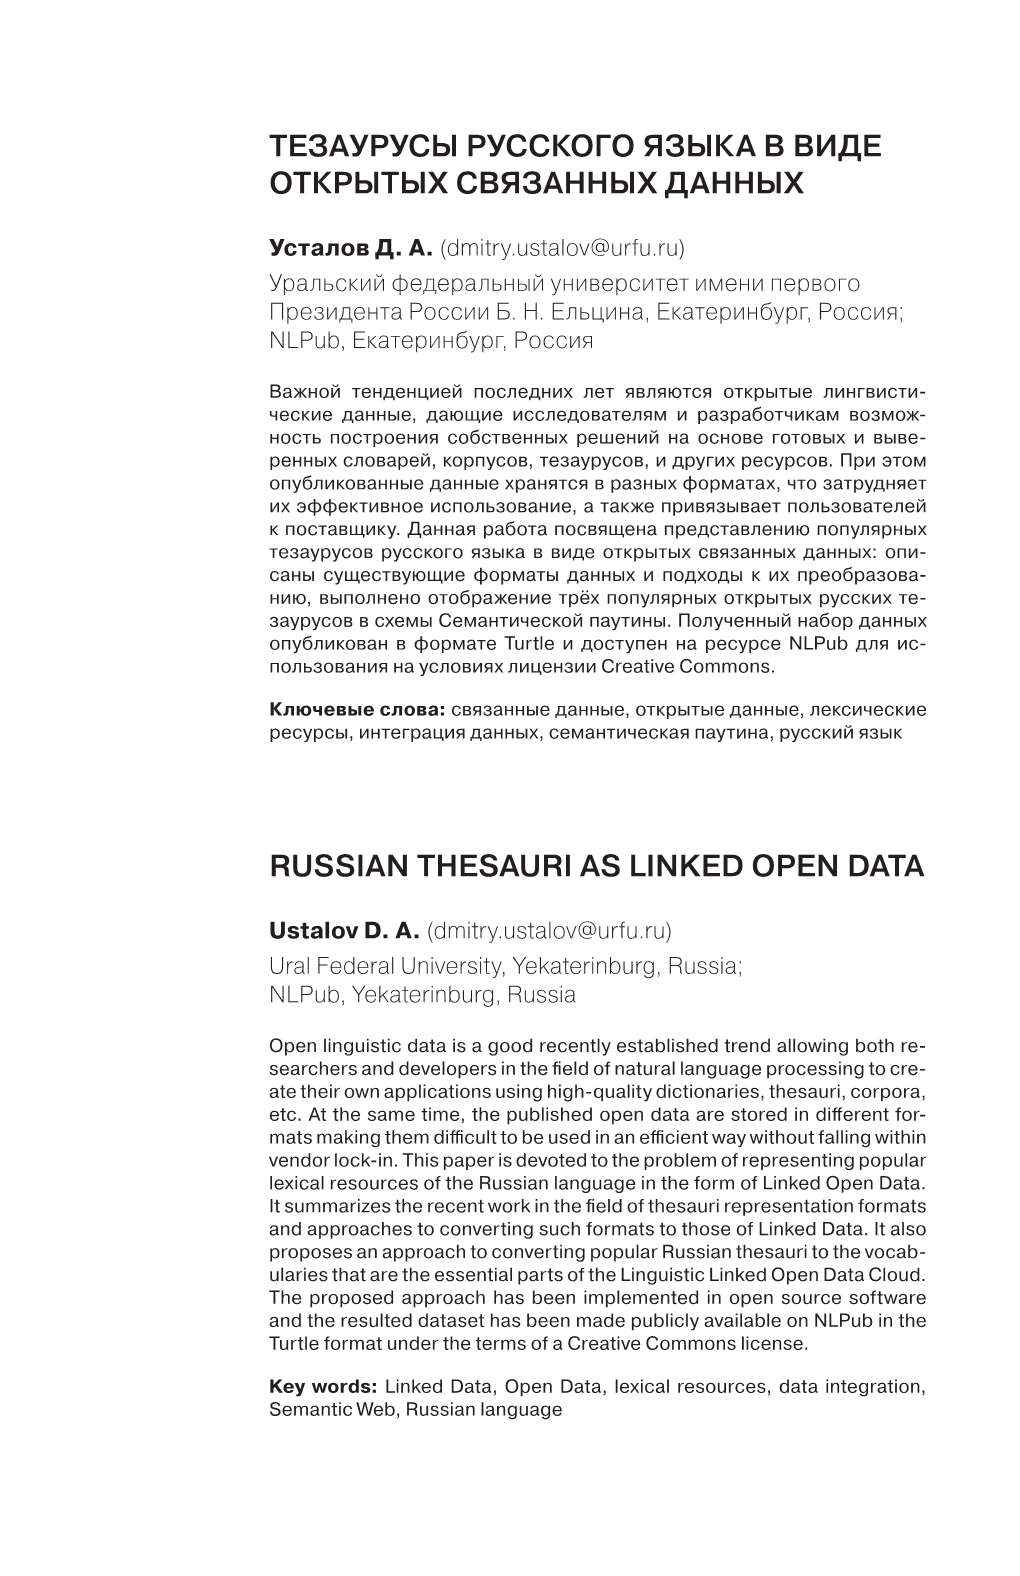 Russian Thesauri As Linked Open Data